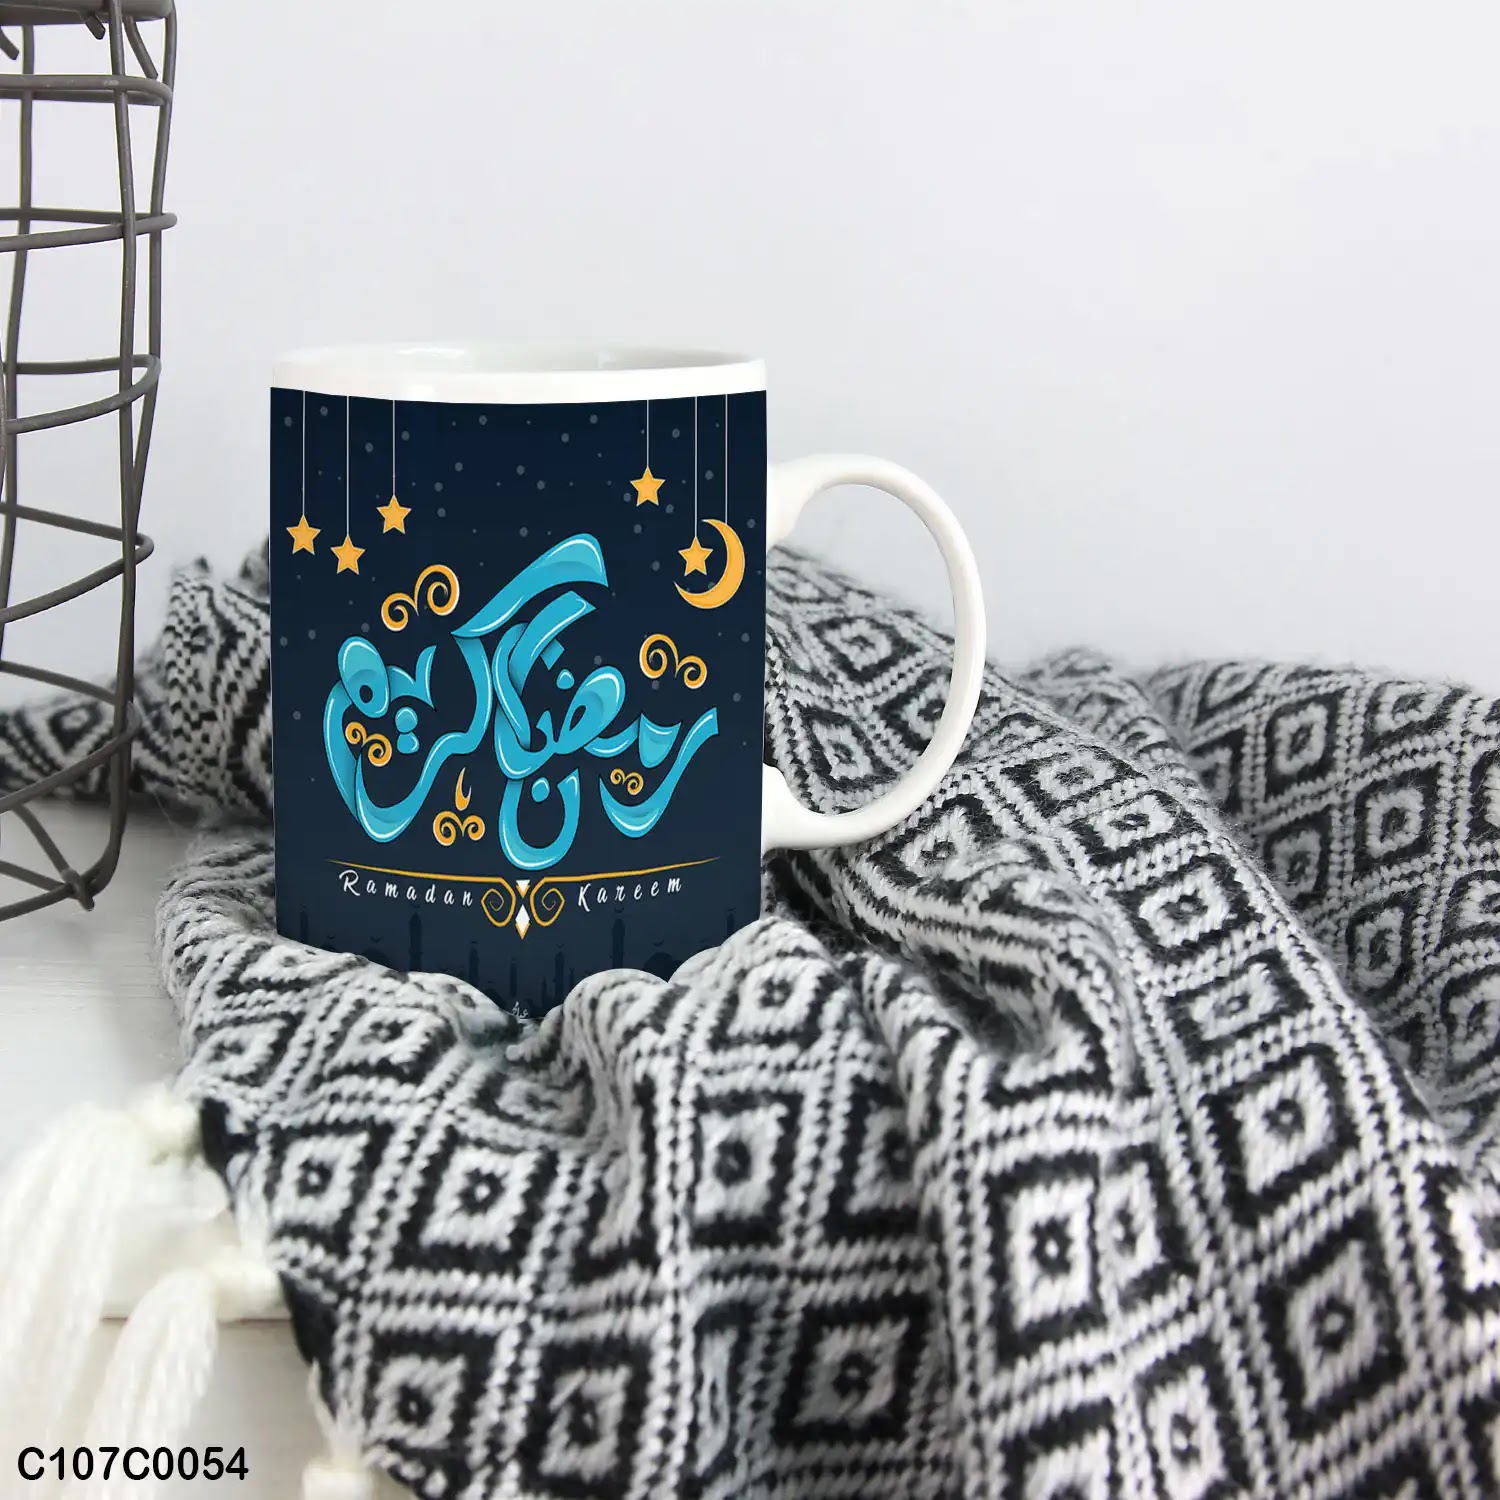 A light blue mug (cup) printed with "Ramadan Kareem" and lanterns